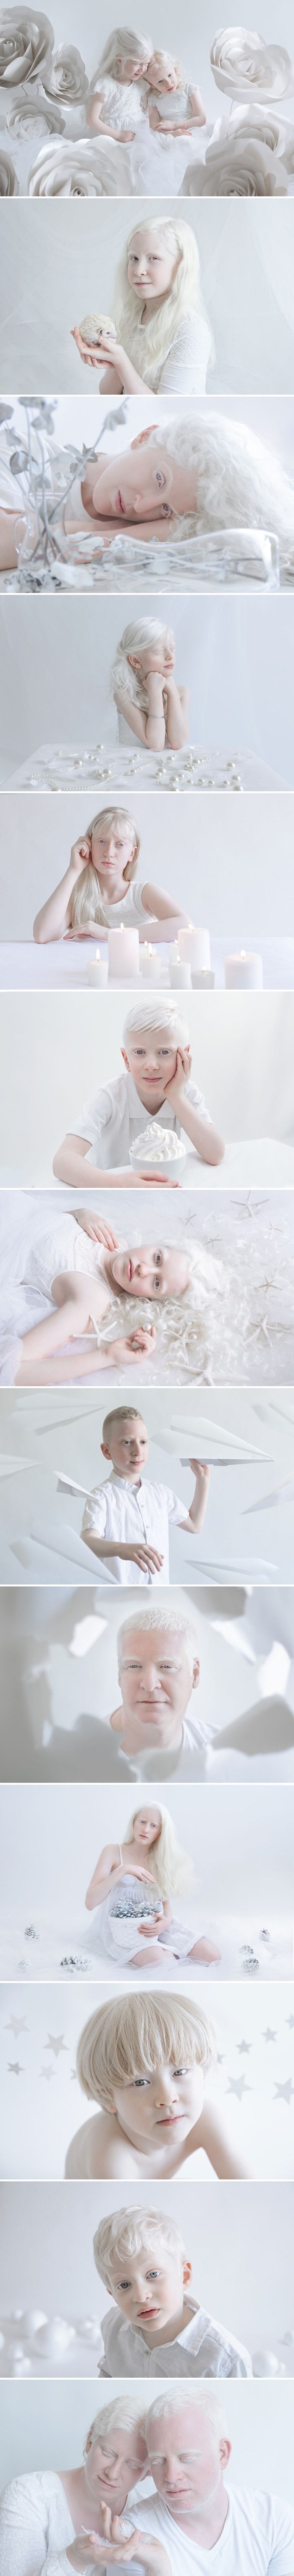 Fotografkinja je ljepotu ljudi s albinizmom prikazala na jedan vrlo poseban način